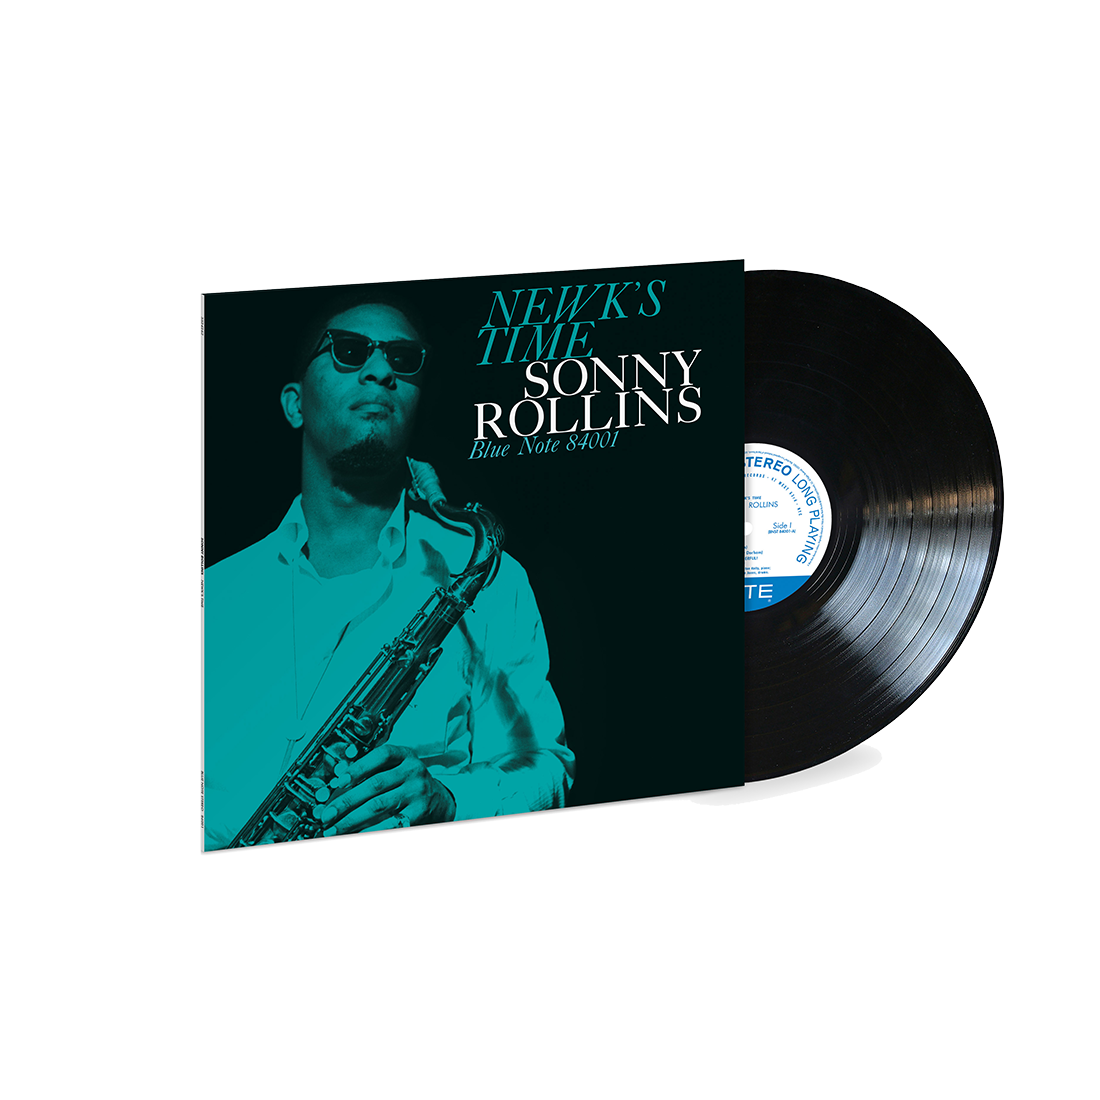 Sonny Rollins - Newk's Time (Classic Vinyl Series): Vinyl LP